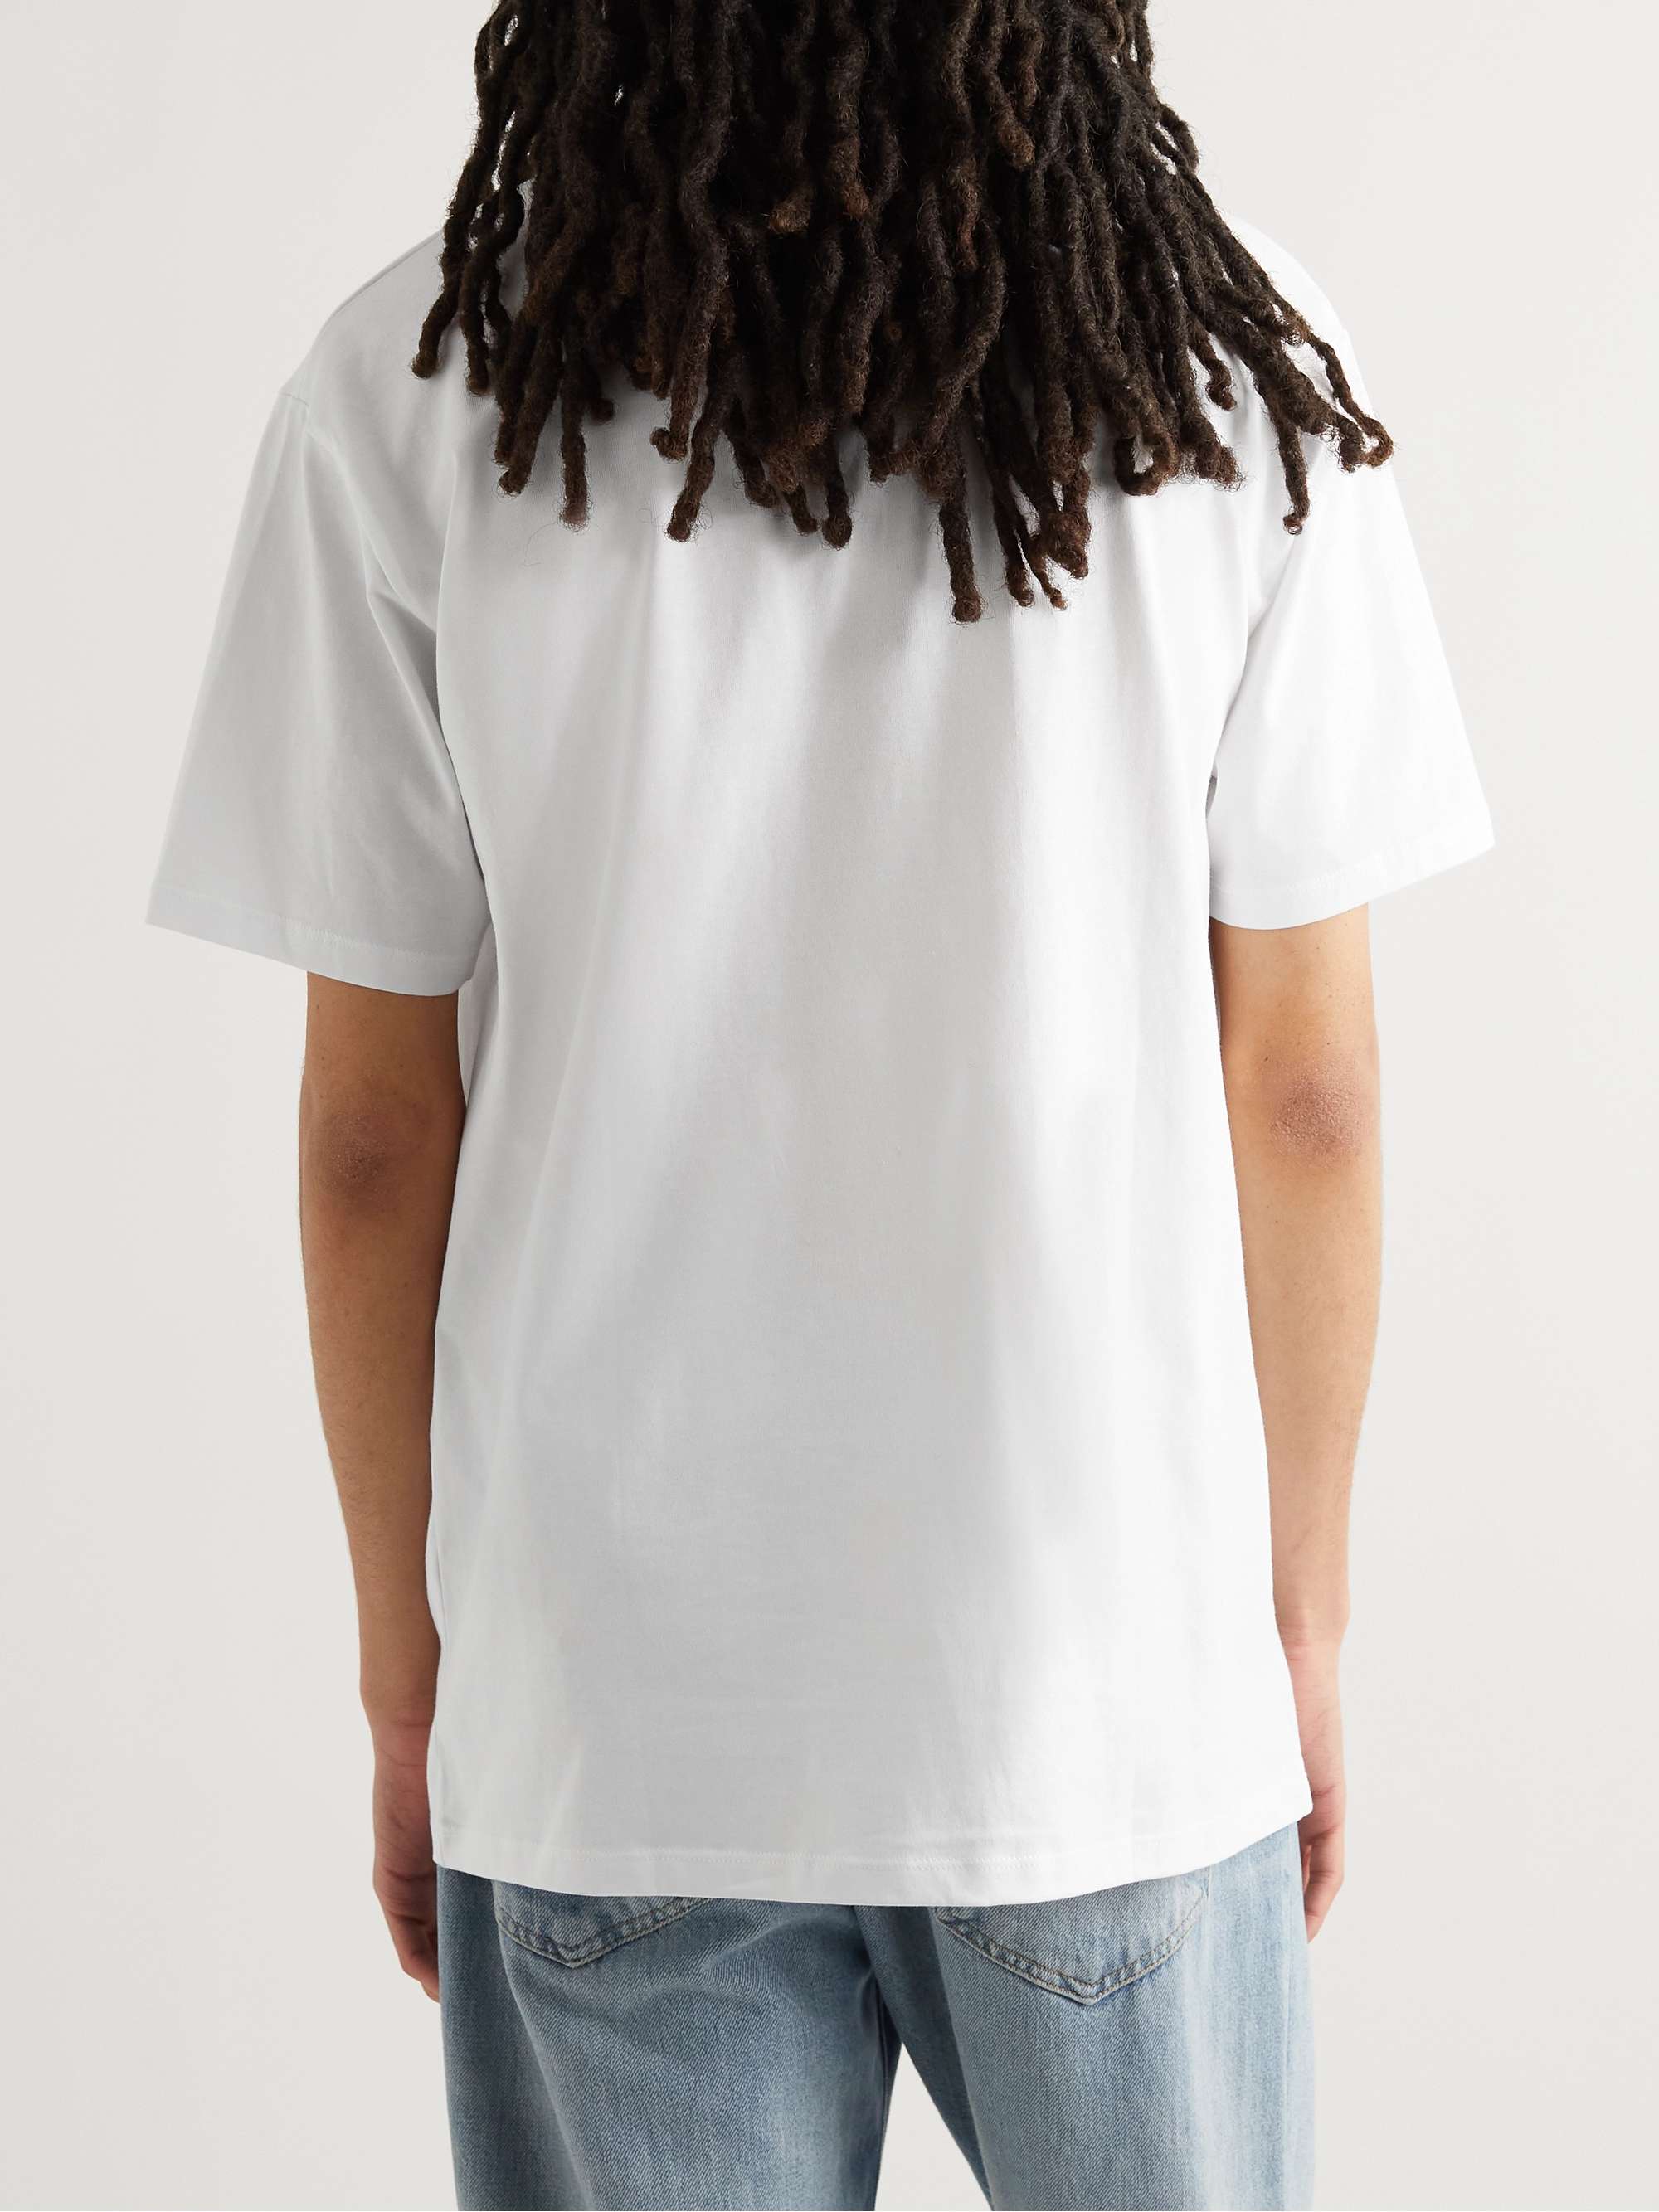 A.P.C. Logo-Print Cotton-Jersey T-Shirt for Men | MR PORTER